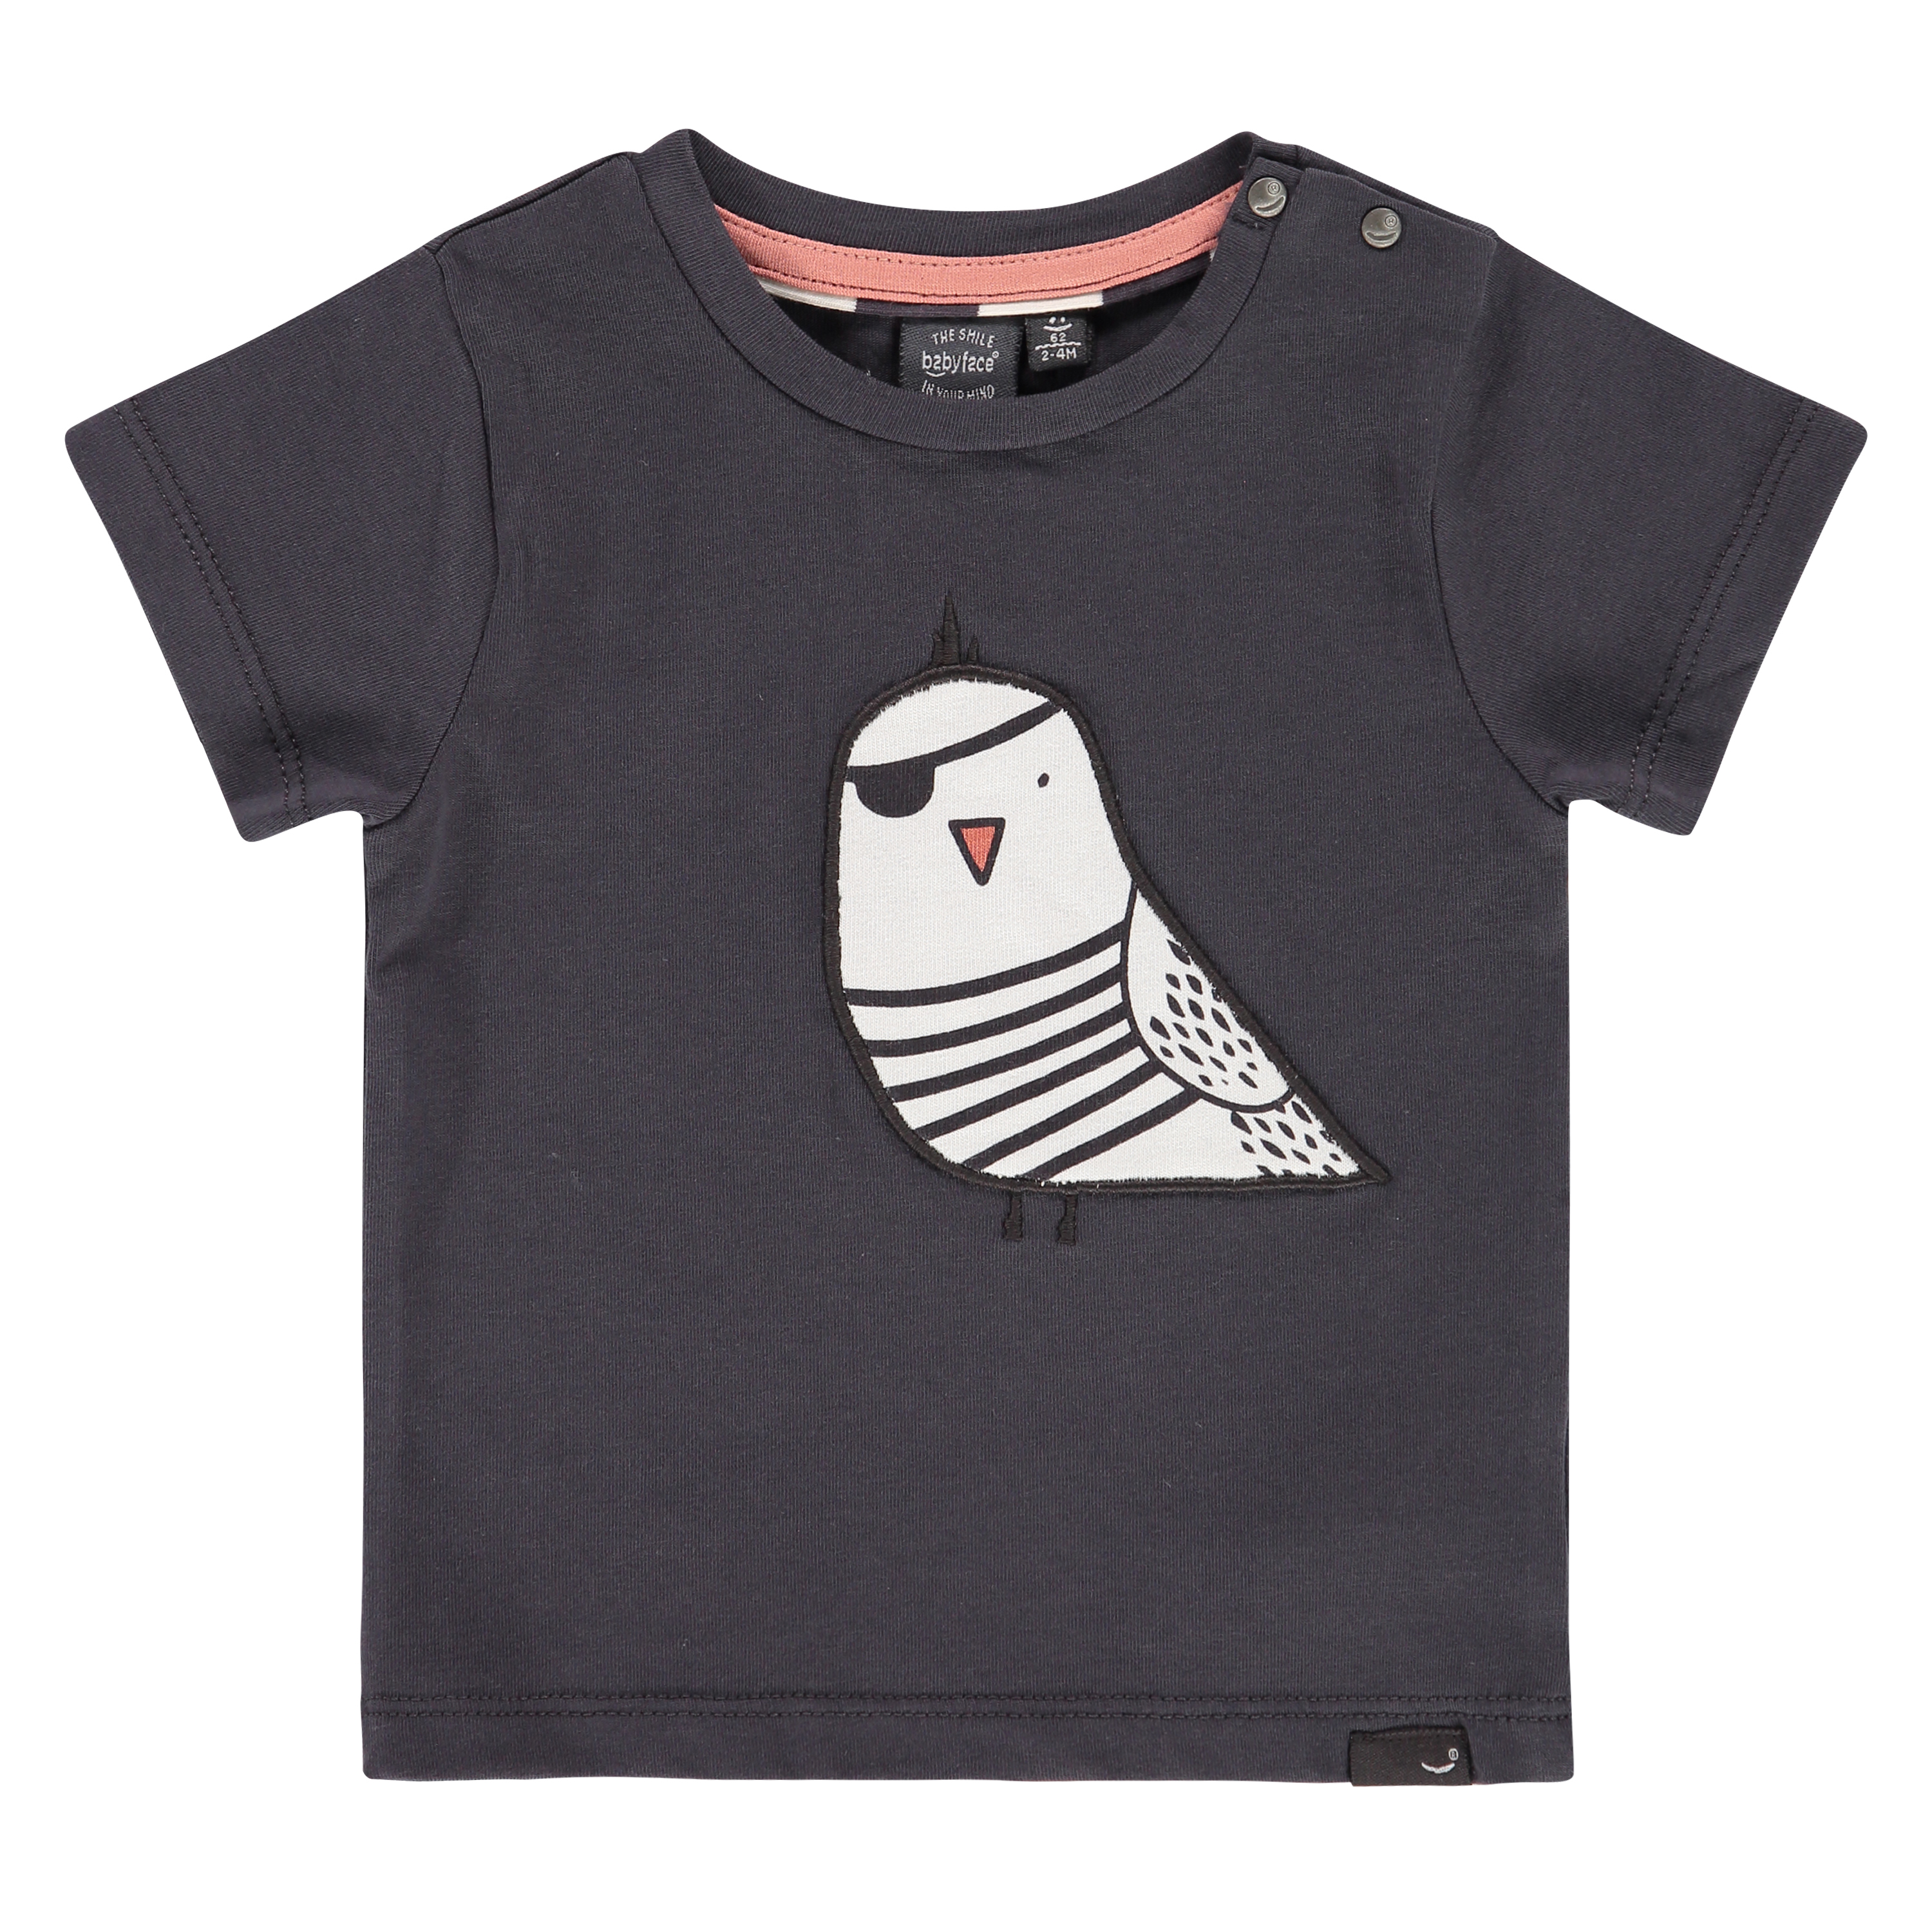 Pirate bird shirt in dark grey 1